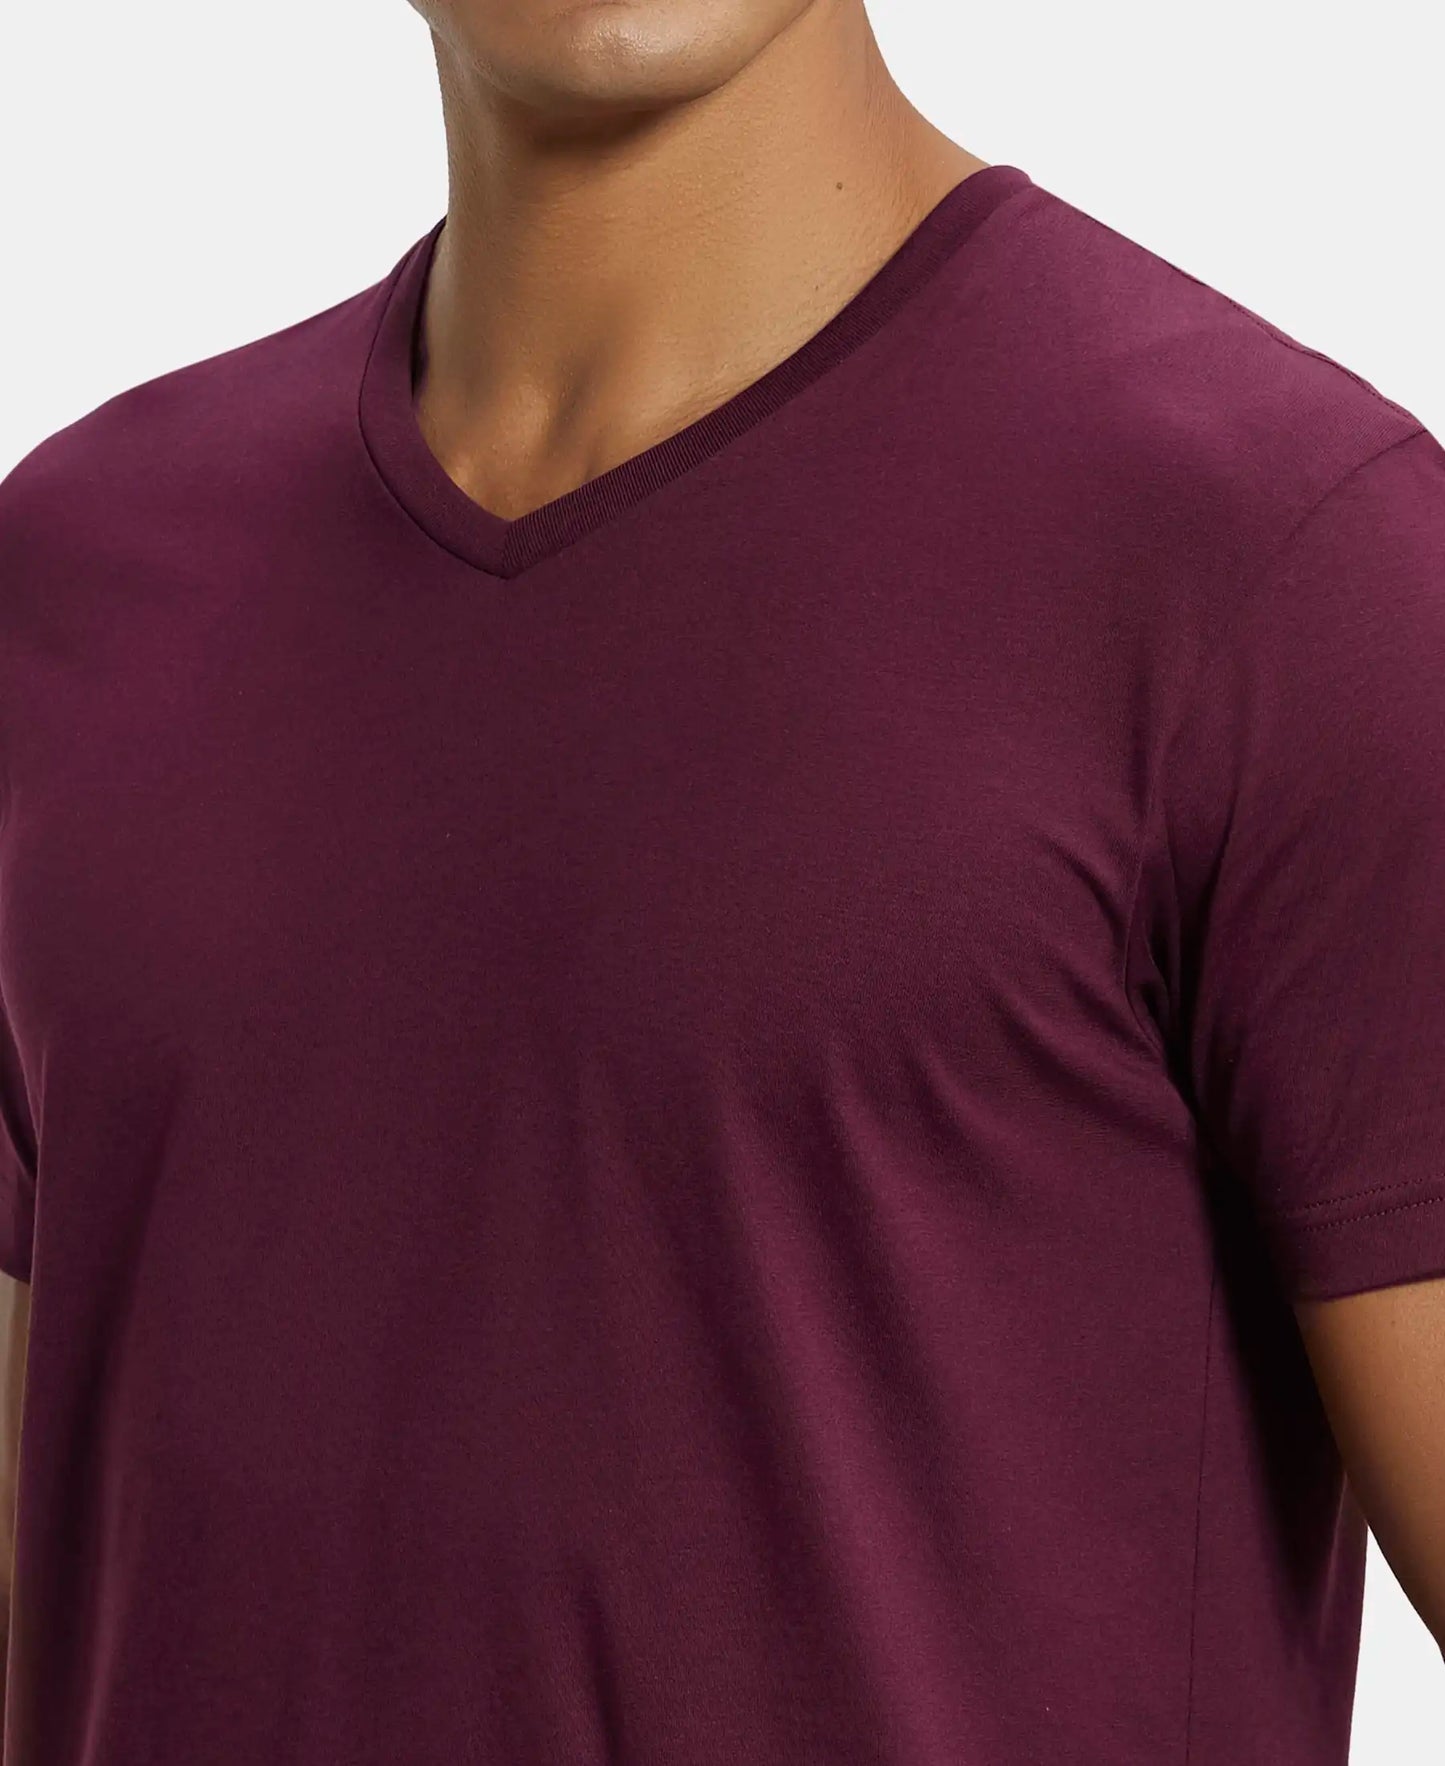 Super Combed Cotton Rich Solid V Neck Half Sleeve T-Shirt  - Wine Tasting-6